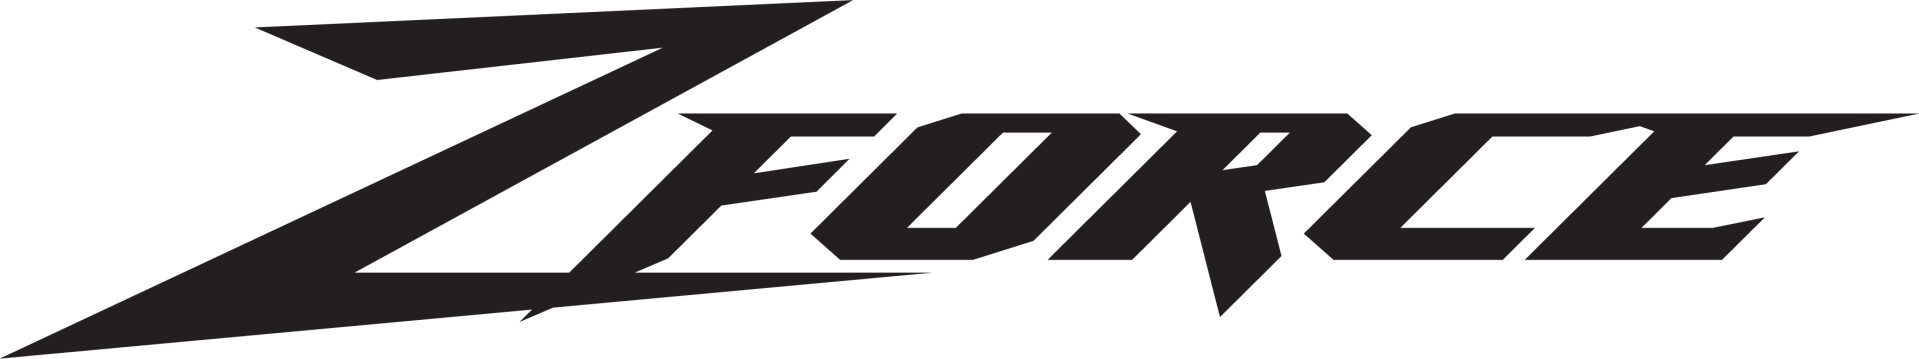 ZFORCE 800 Trail Logo